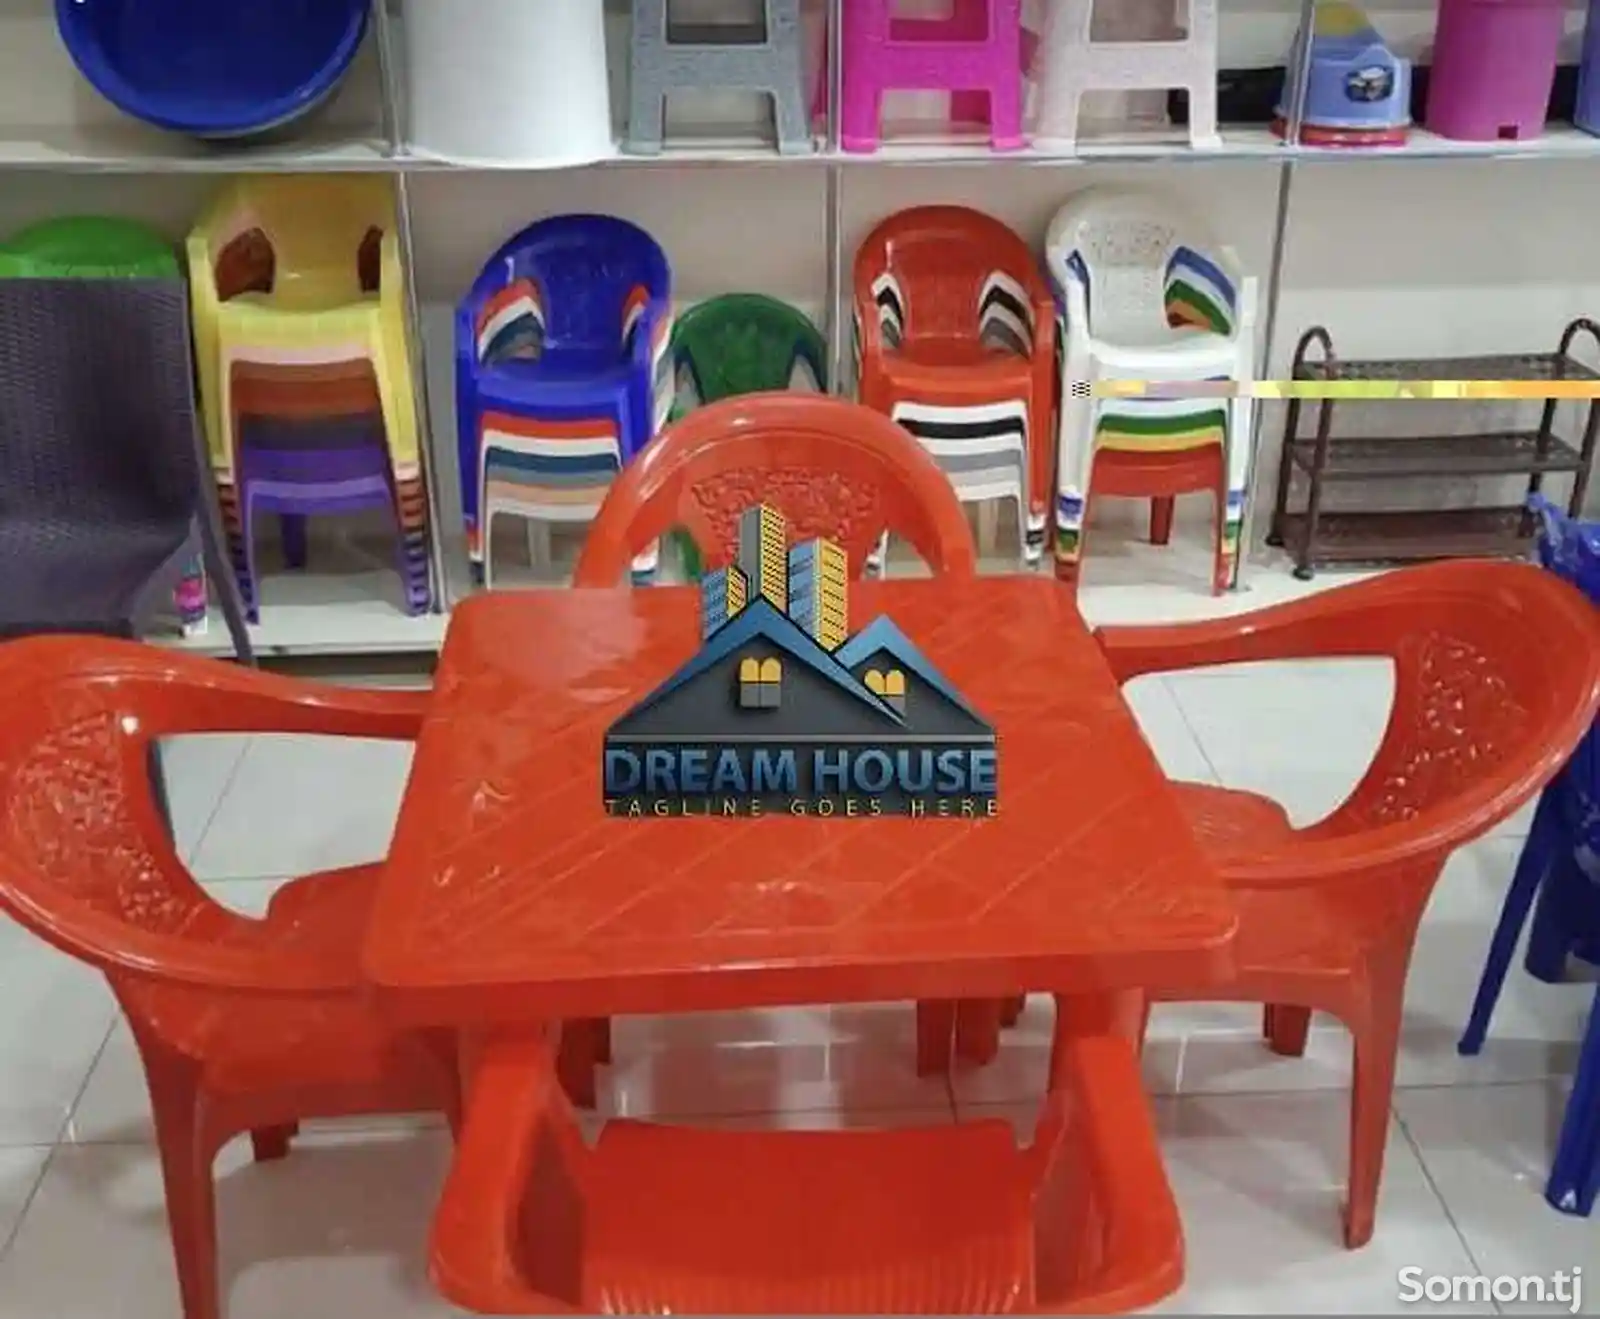 Стол со стульями-1